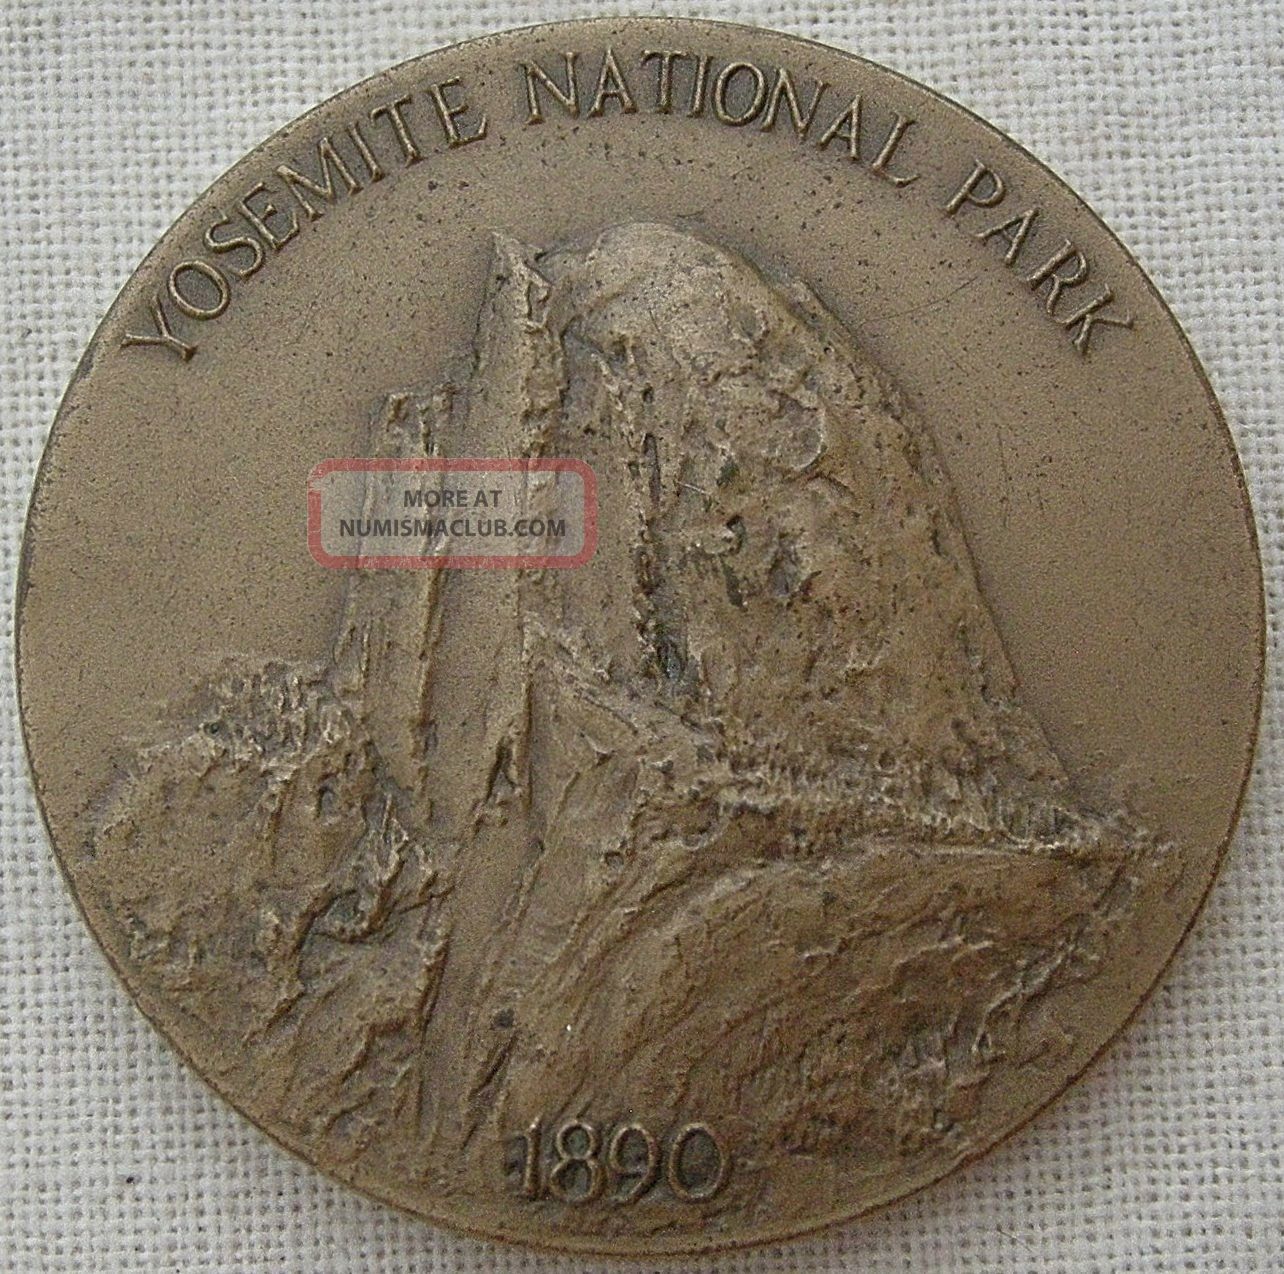 Maco.  National Parks Centennial,  Yosemite Medal,  1972 By Frank Hagel Exonumia photo